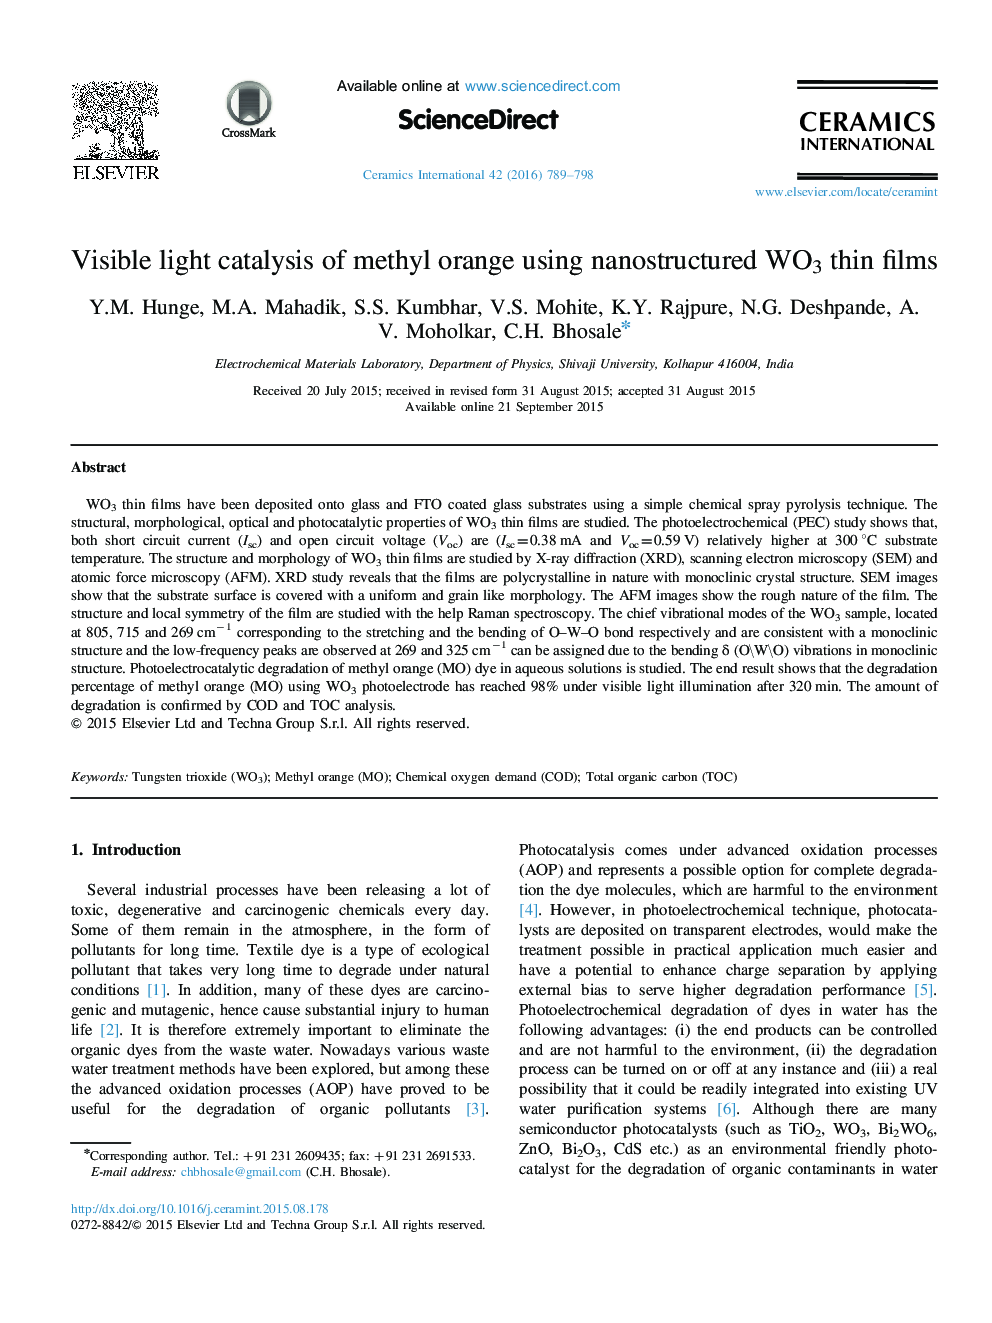 Visible light catalysis of methyl orange using nanostructured WO3 thin films